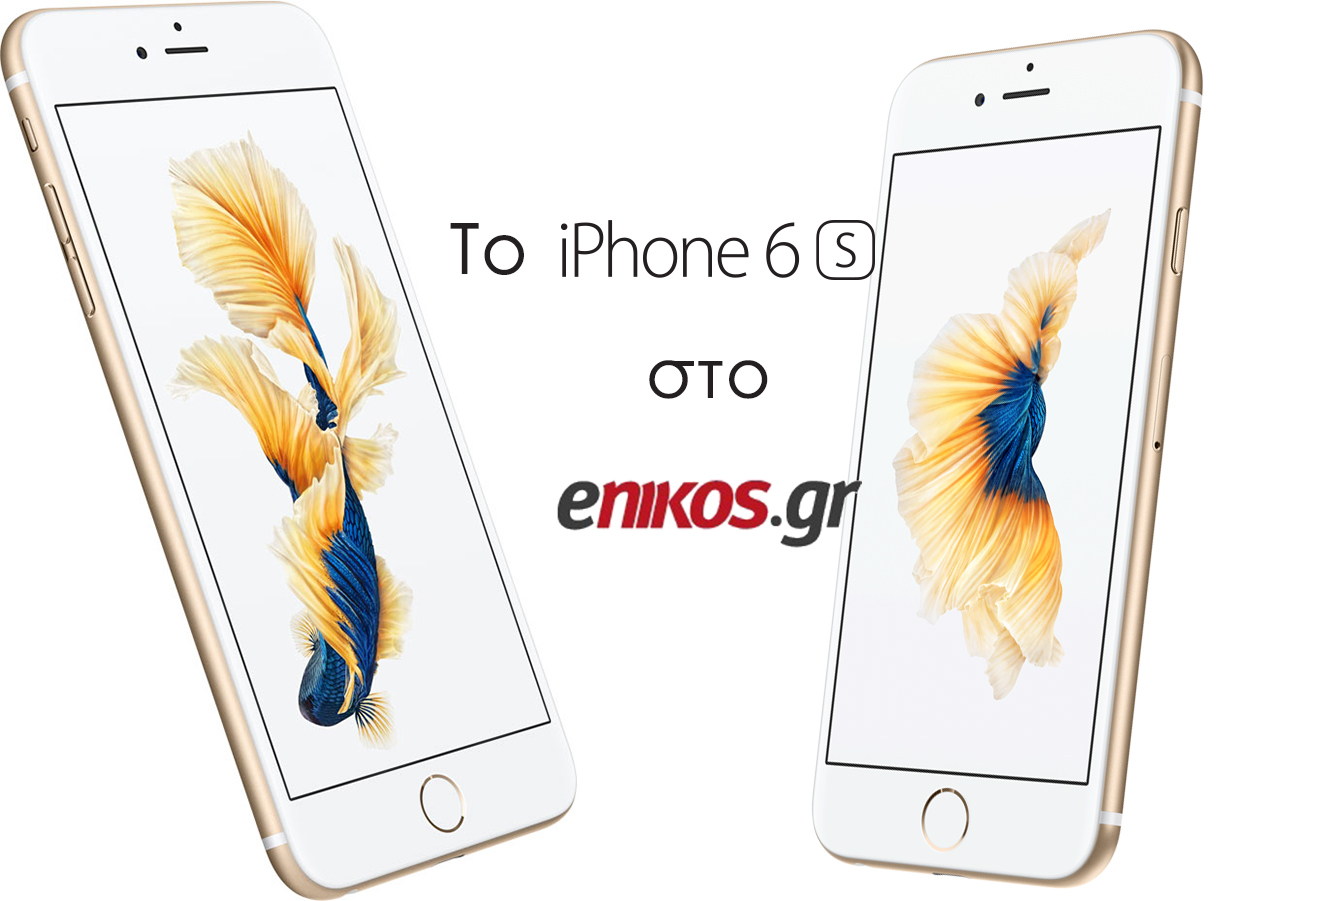 To iPhone 6s στο enikos.gr